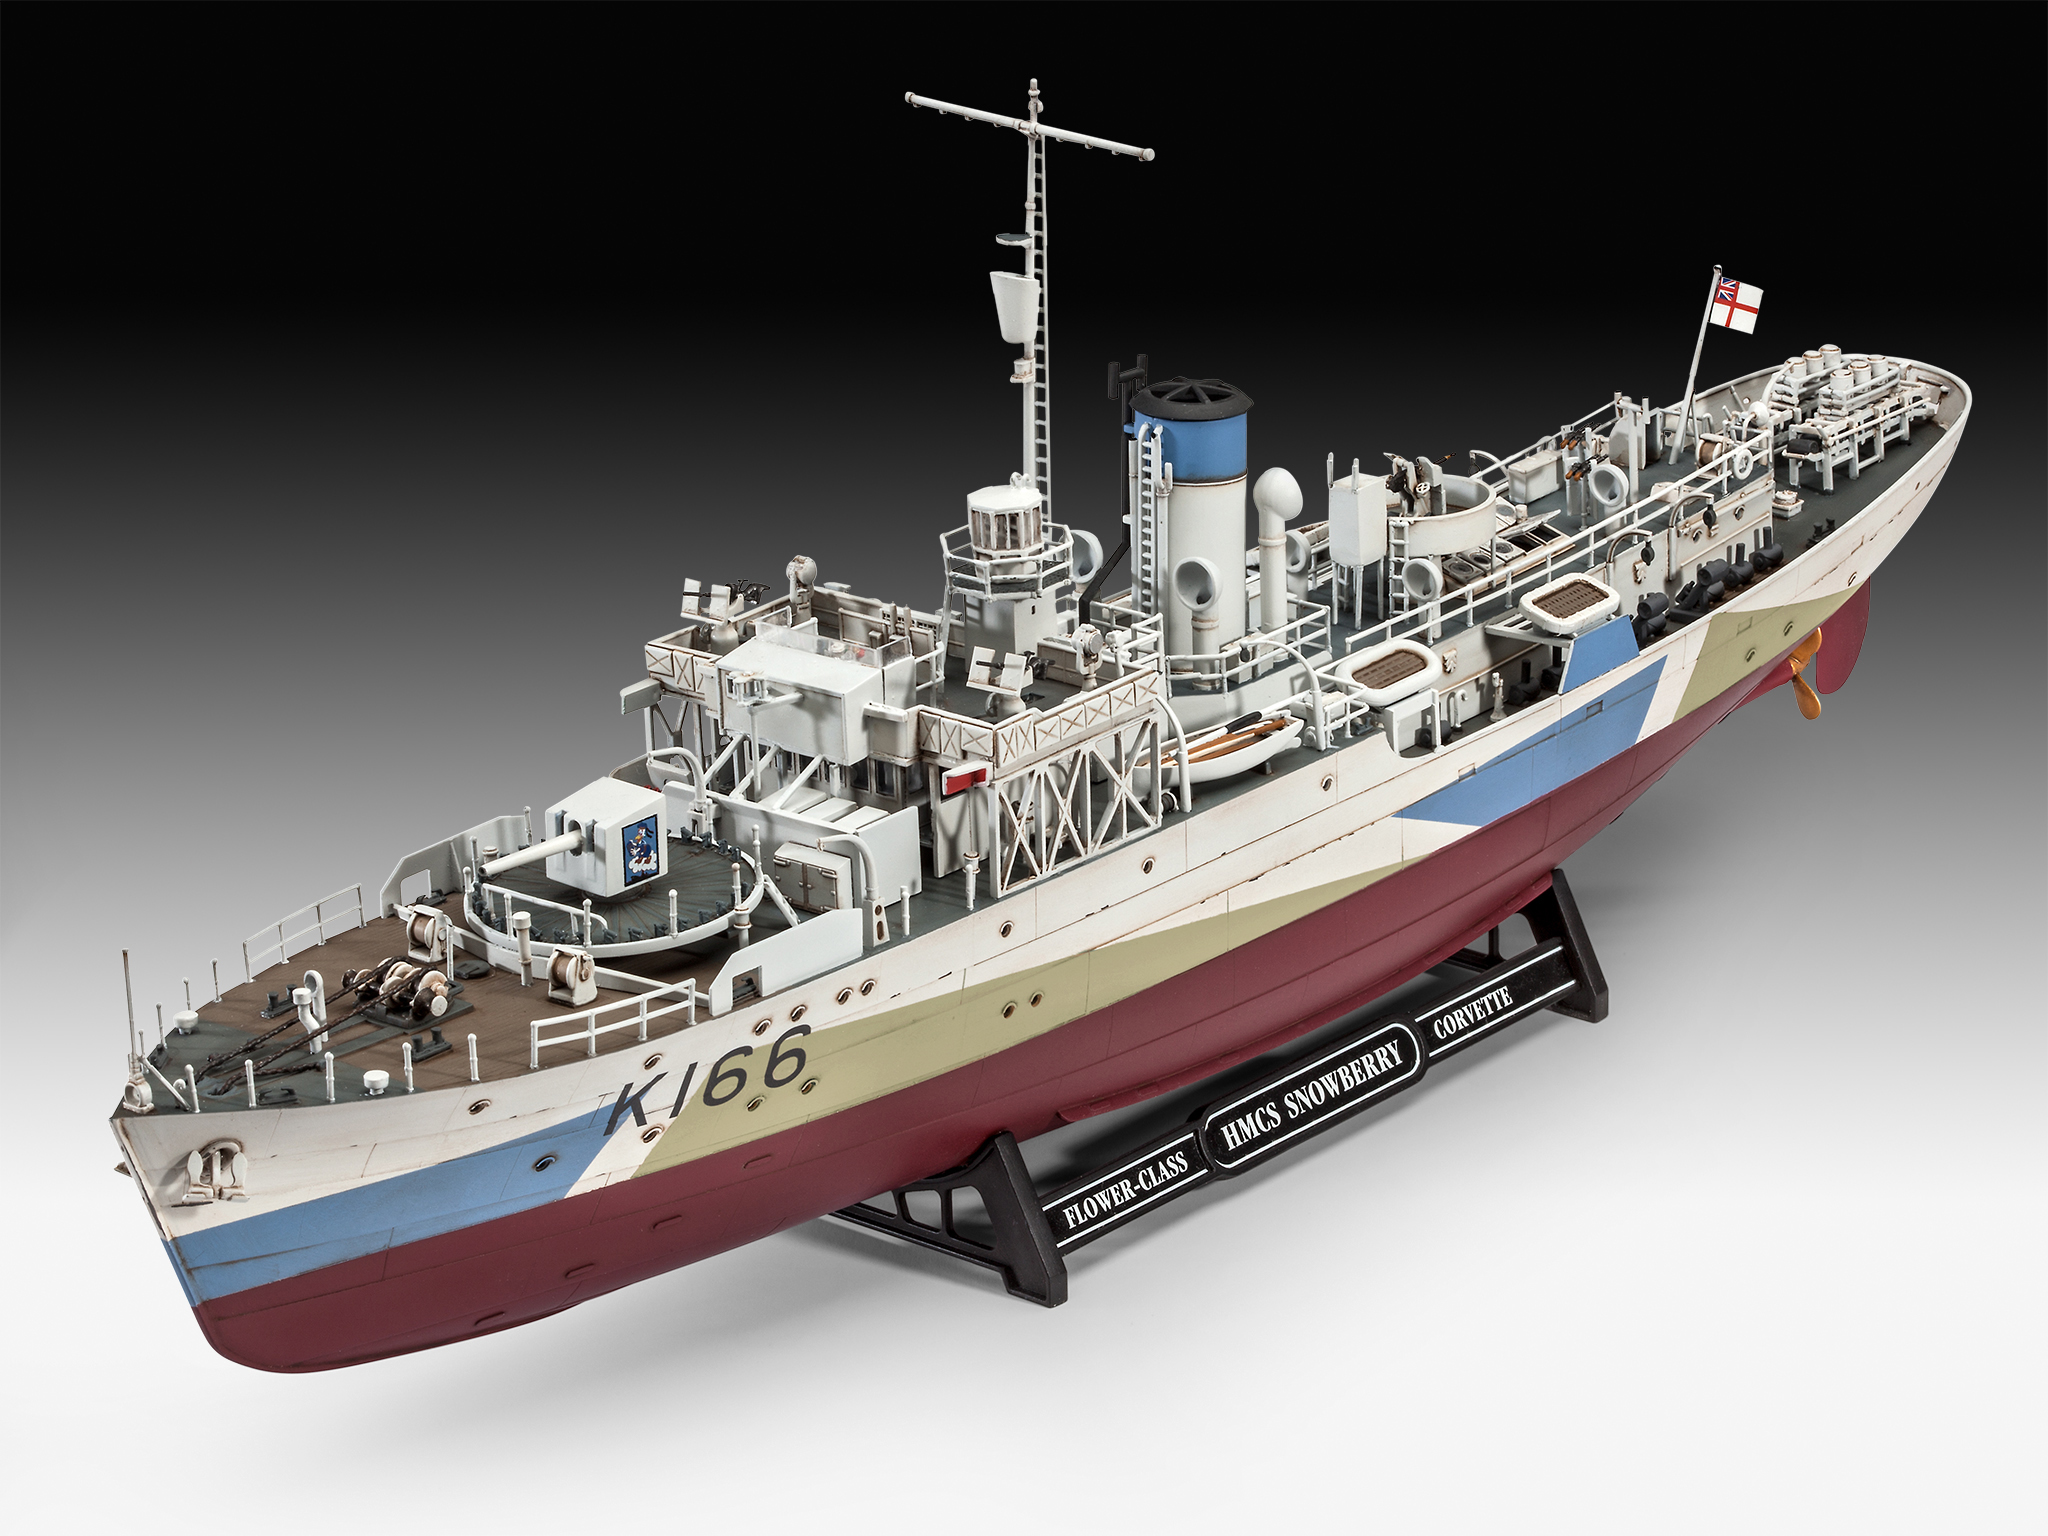 REVELL HMCS Snowberry Modellbausatz, Mehrfarbig